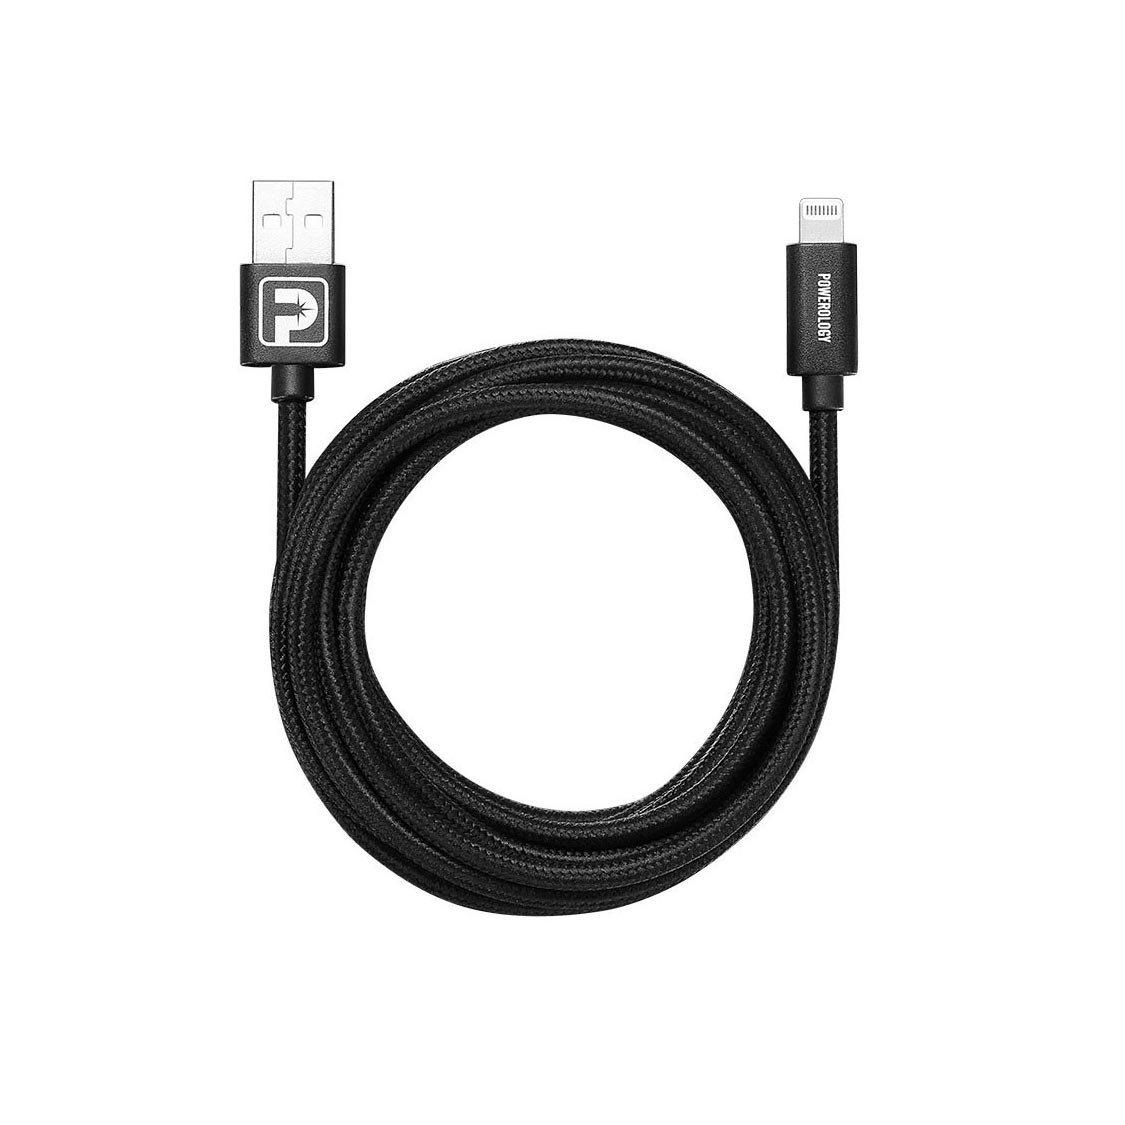 Powerology Lightning USB 6-feet Braided Cable (black)